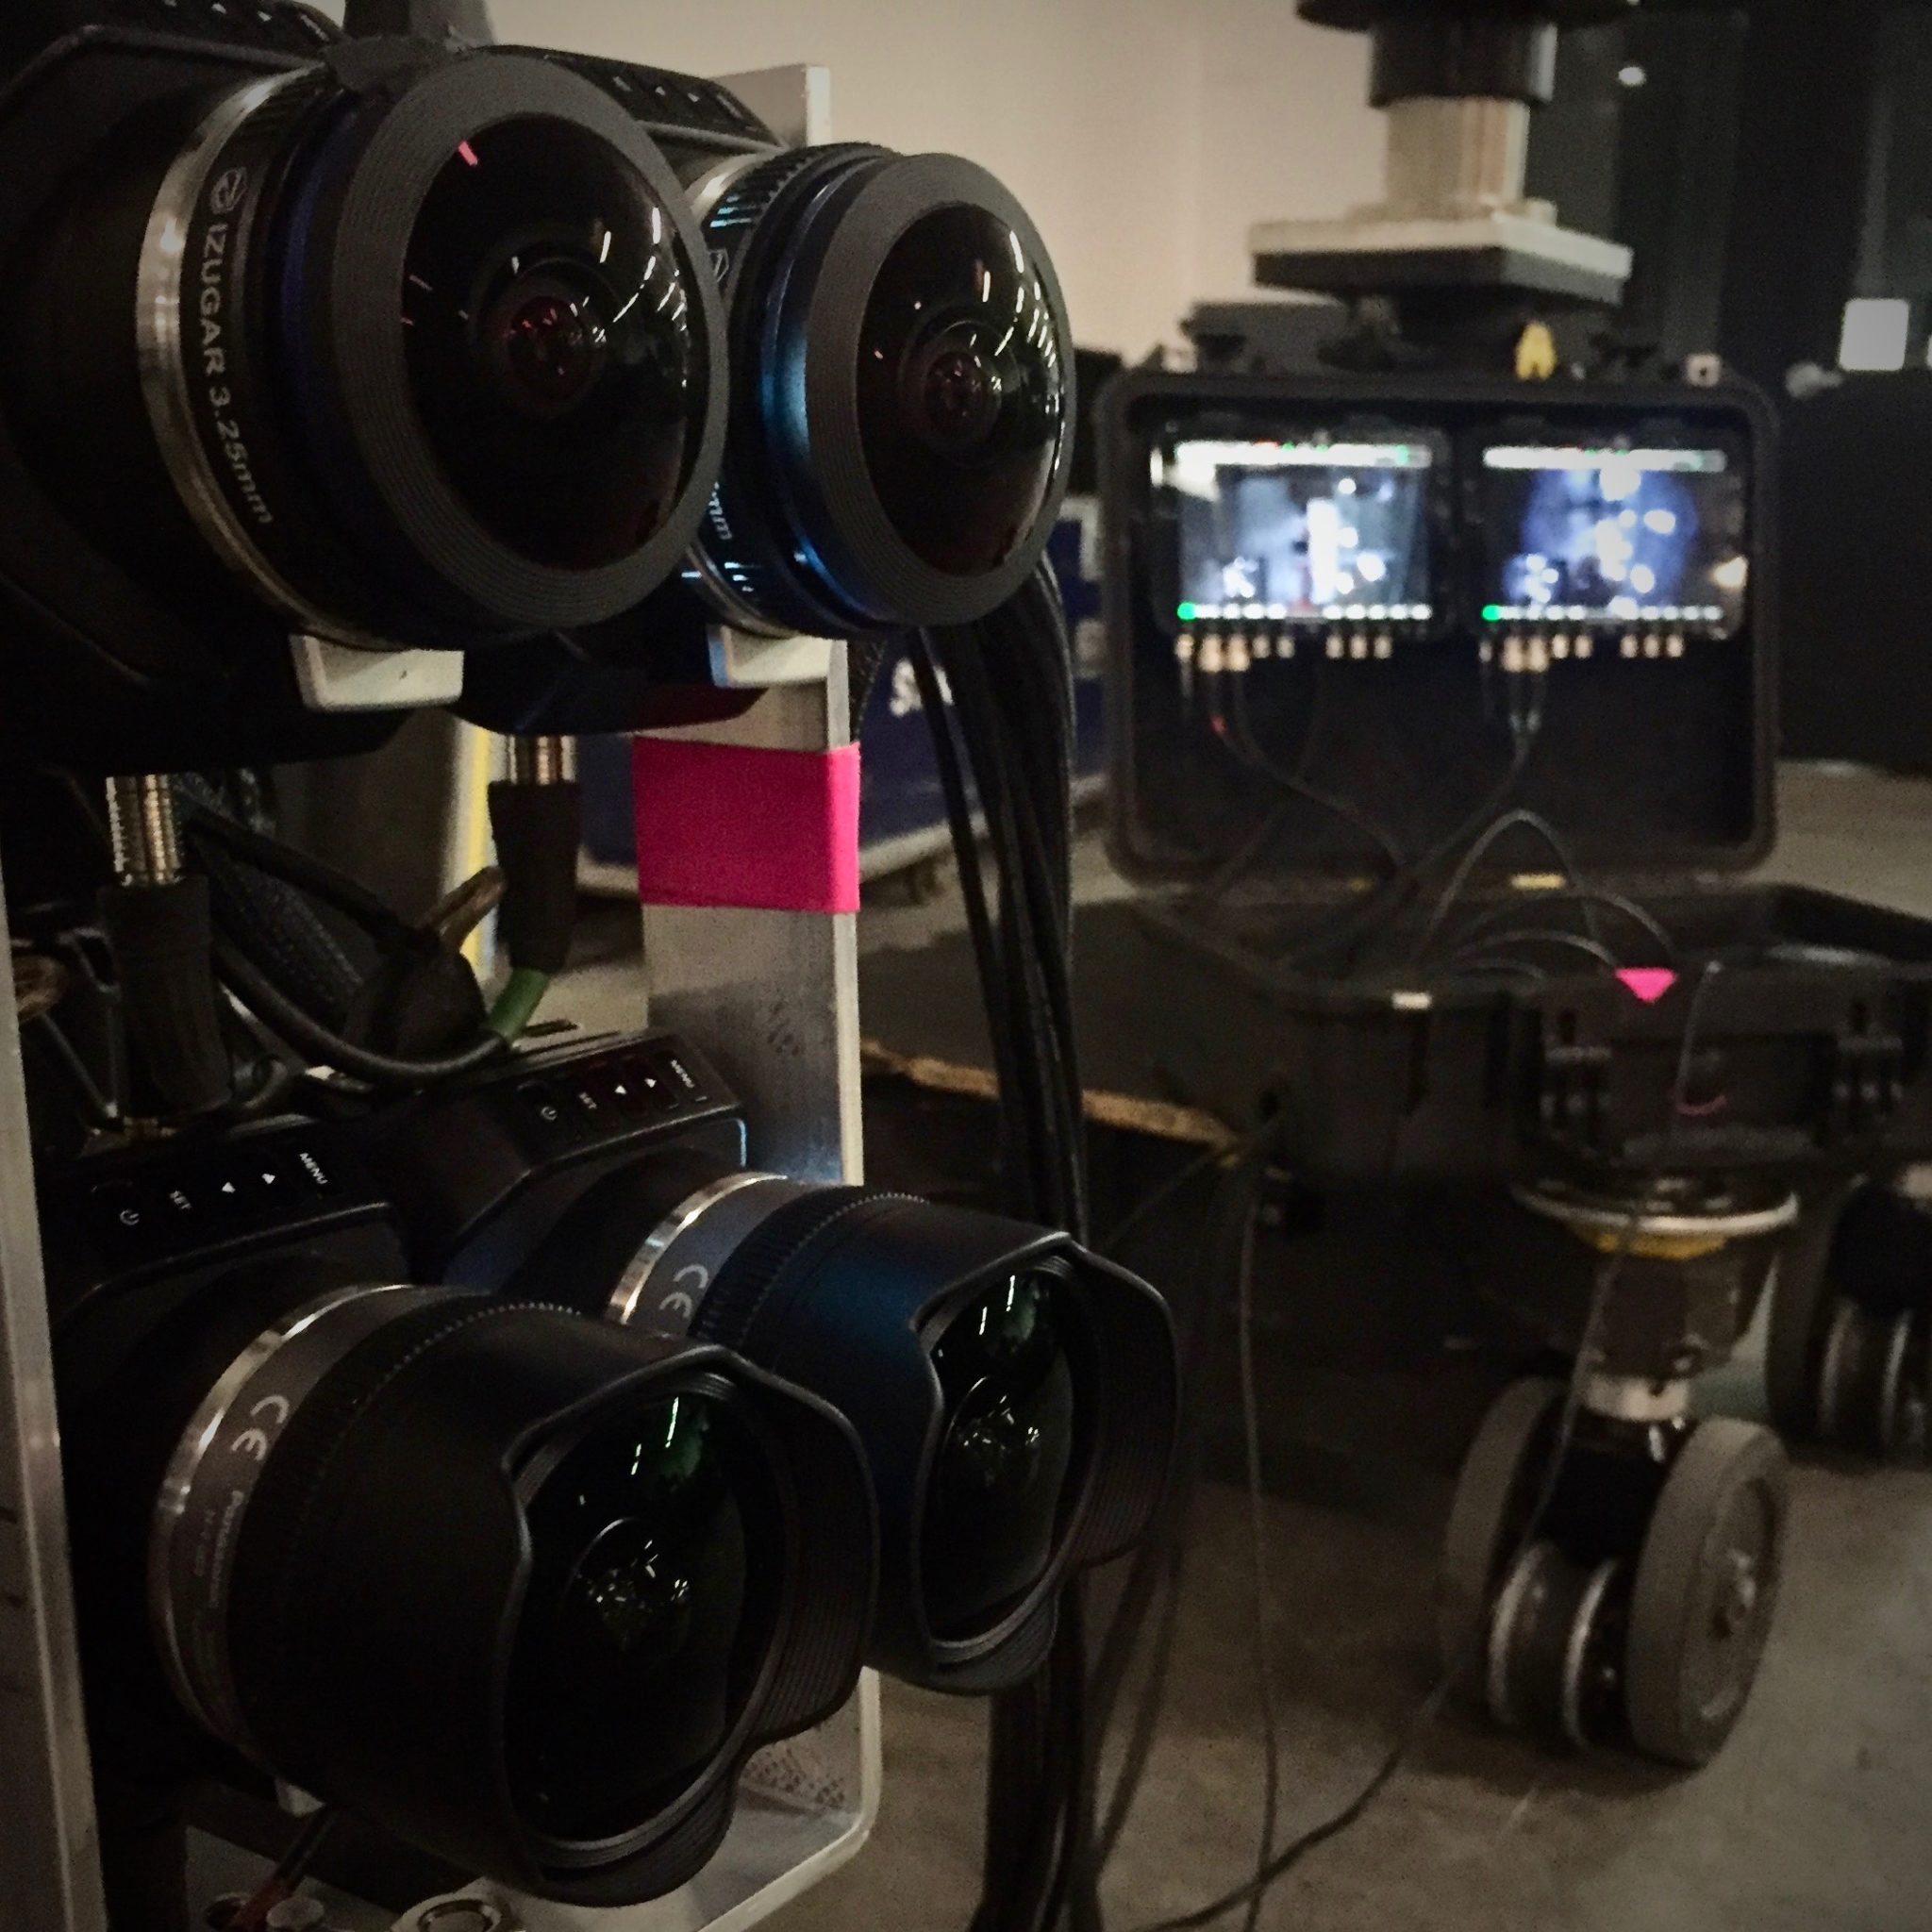 Stereoscopic cameras on set